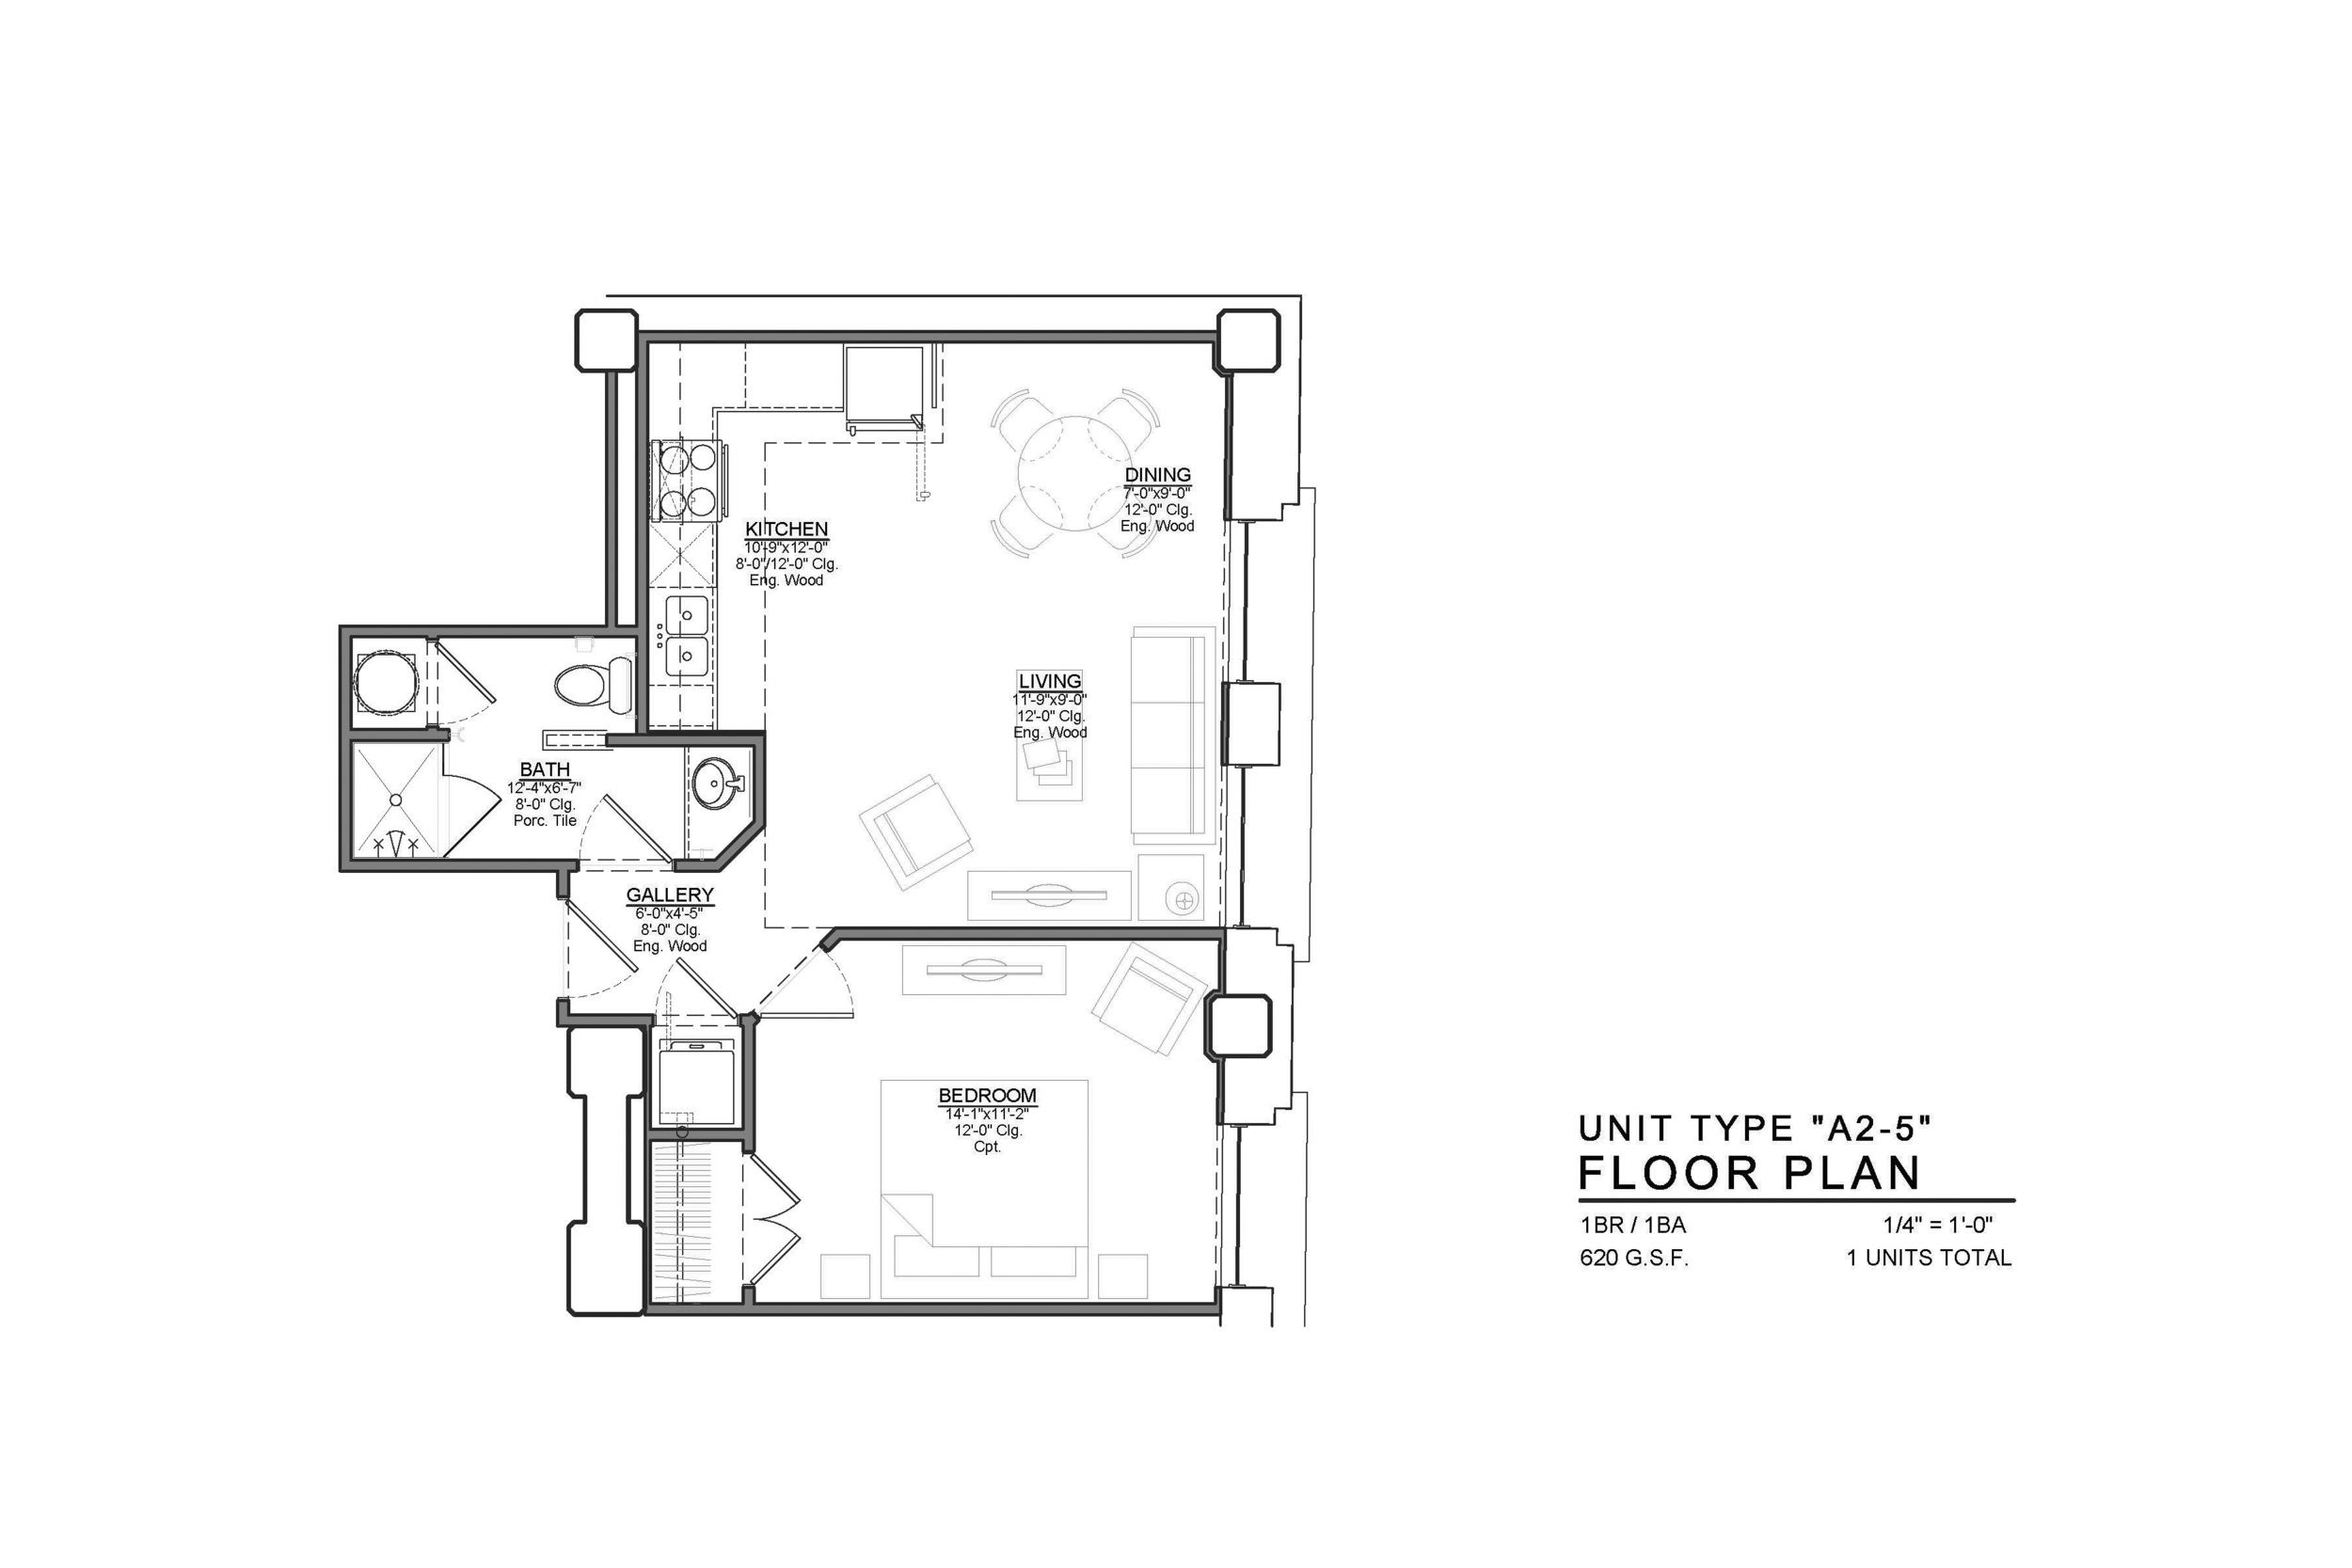 A2-5 FLOOR PLAN: 1 BEDROOM / 1 BATH